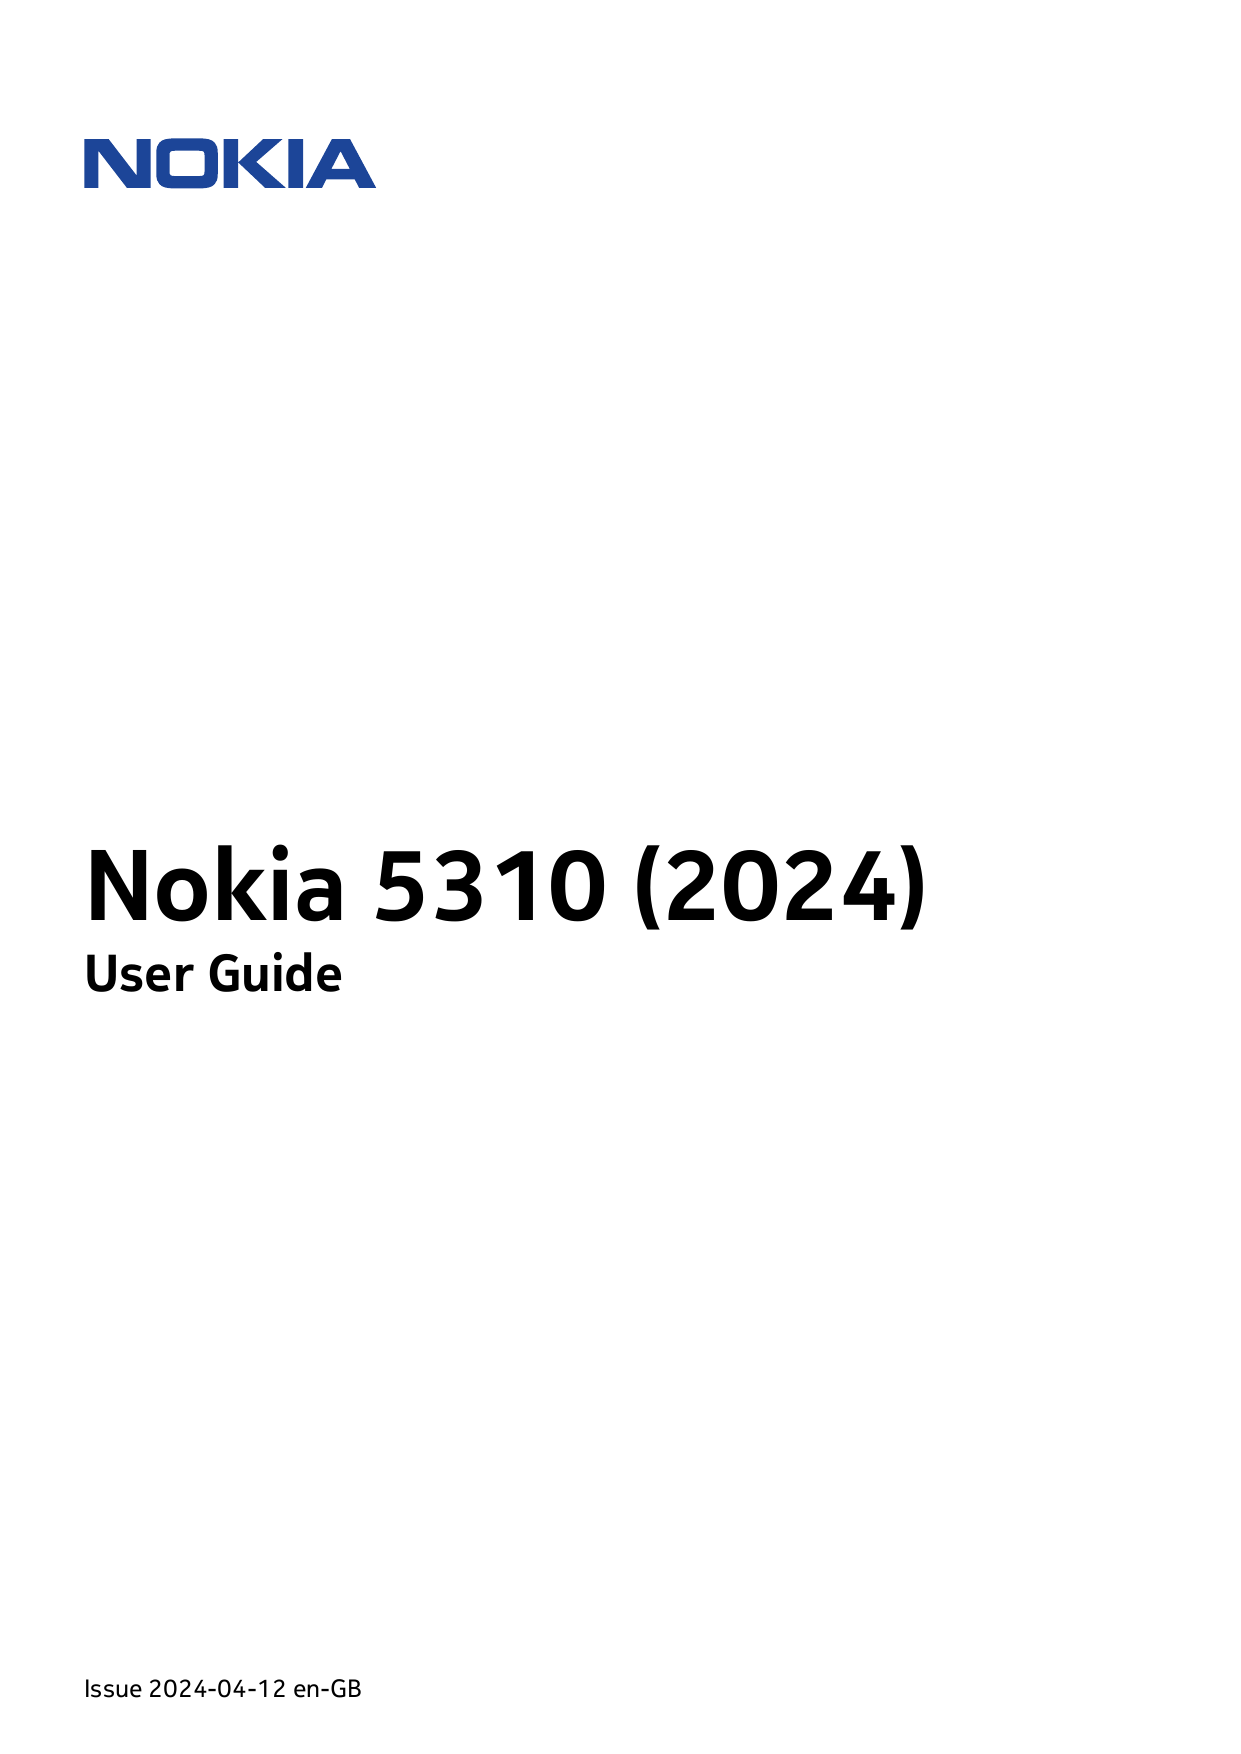 Nokia 5310 (2024)User GuideIssue 2024-04-12 en-GB